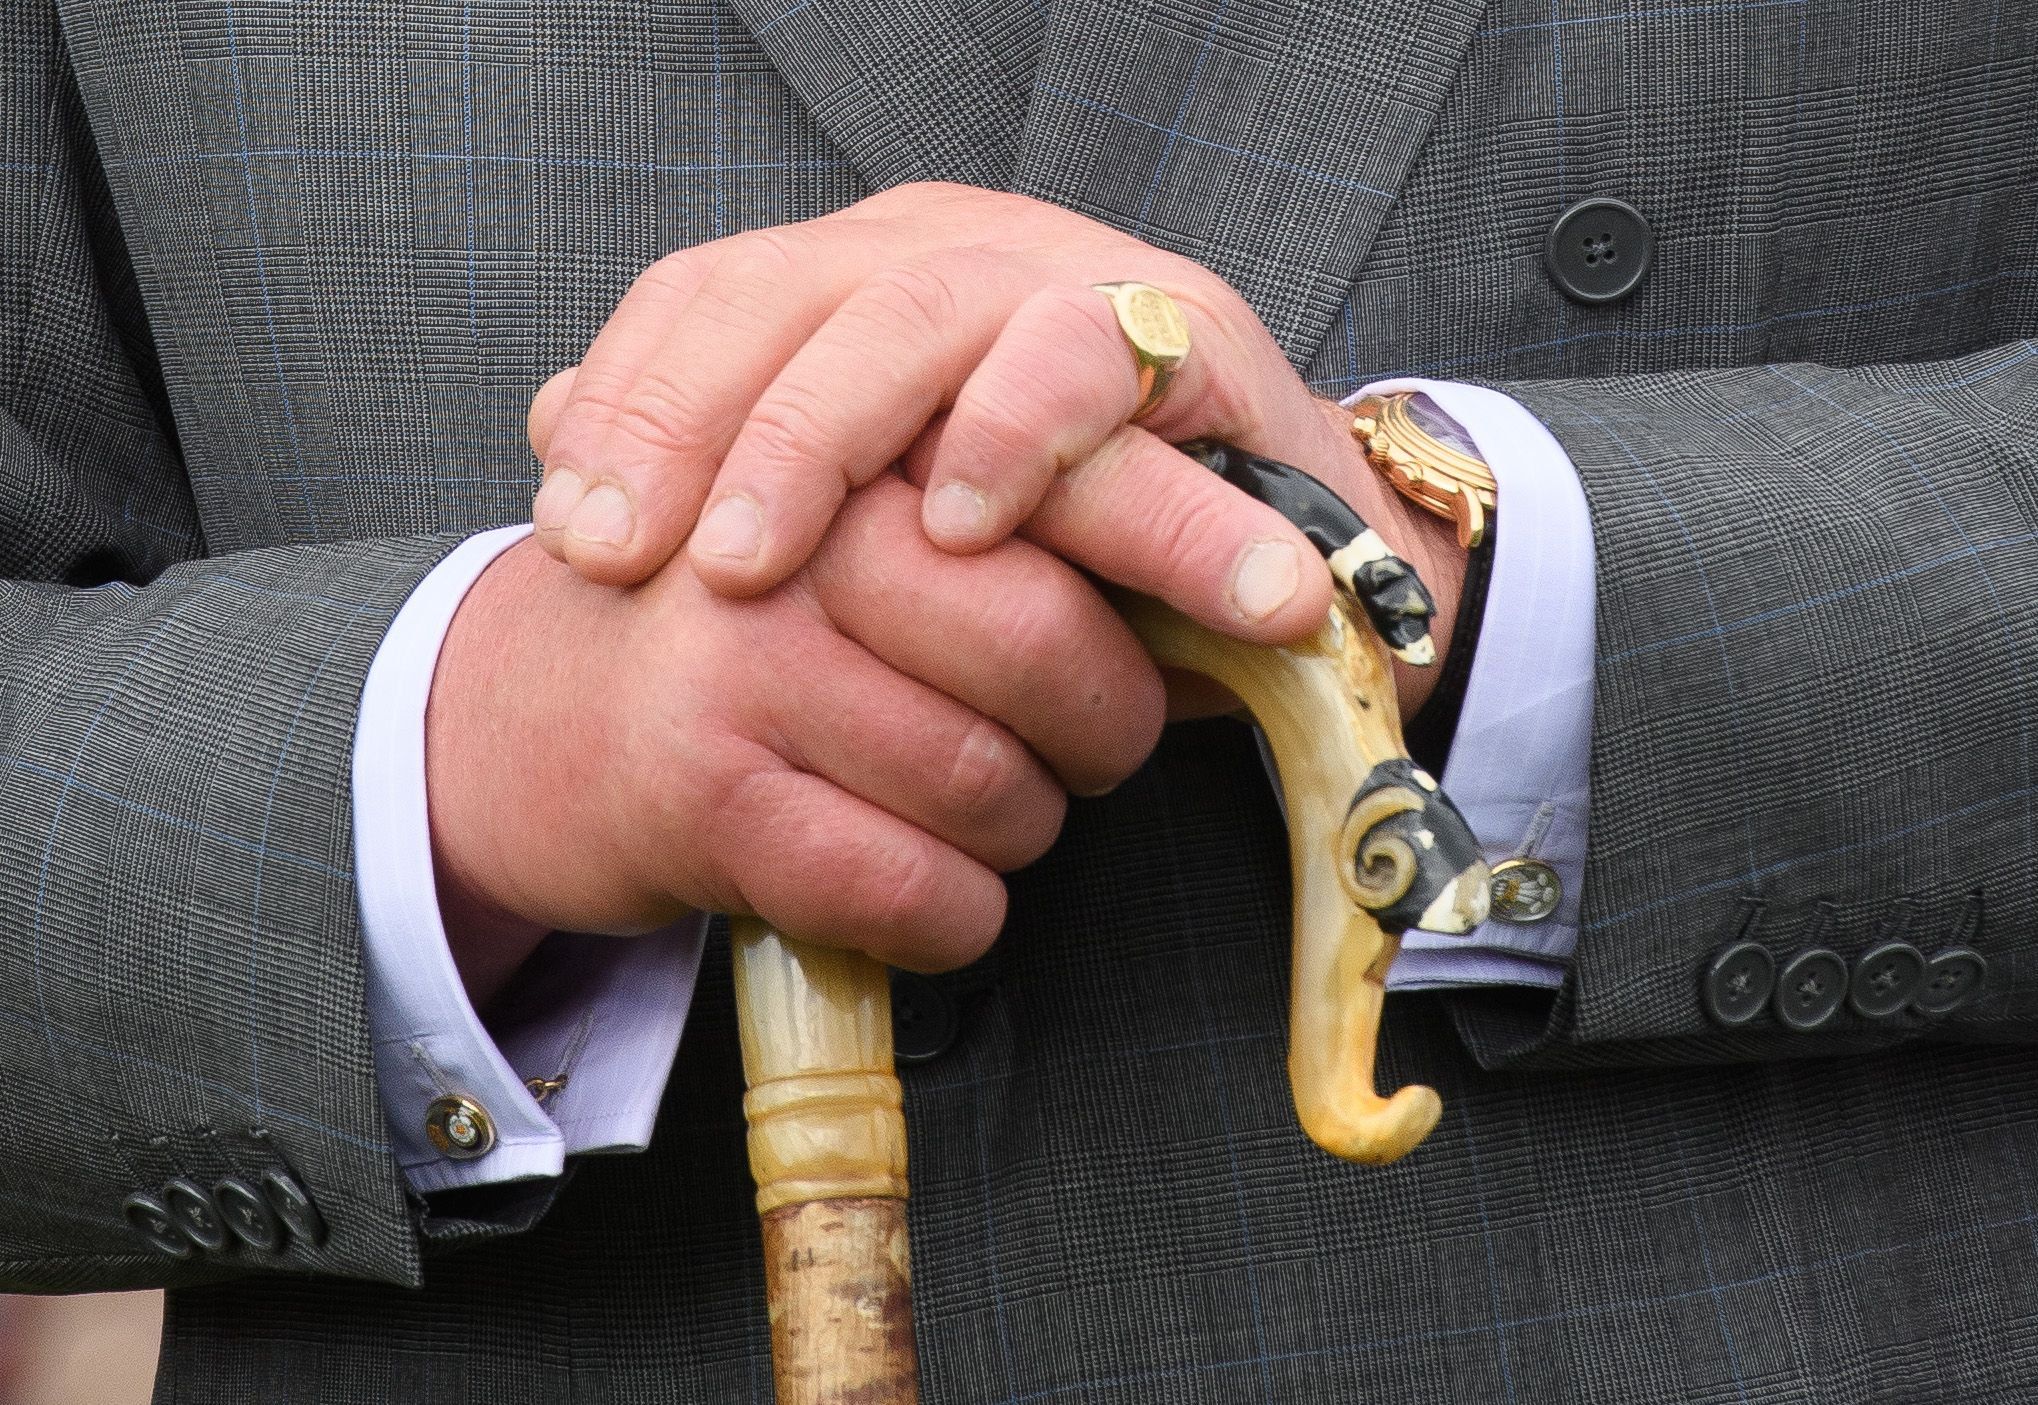 Cincin Pangeran Charles yang selalu dipakai di jari kelingking tangan kirinya.